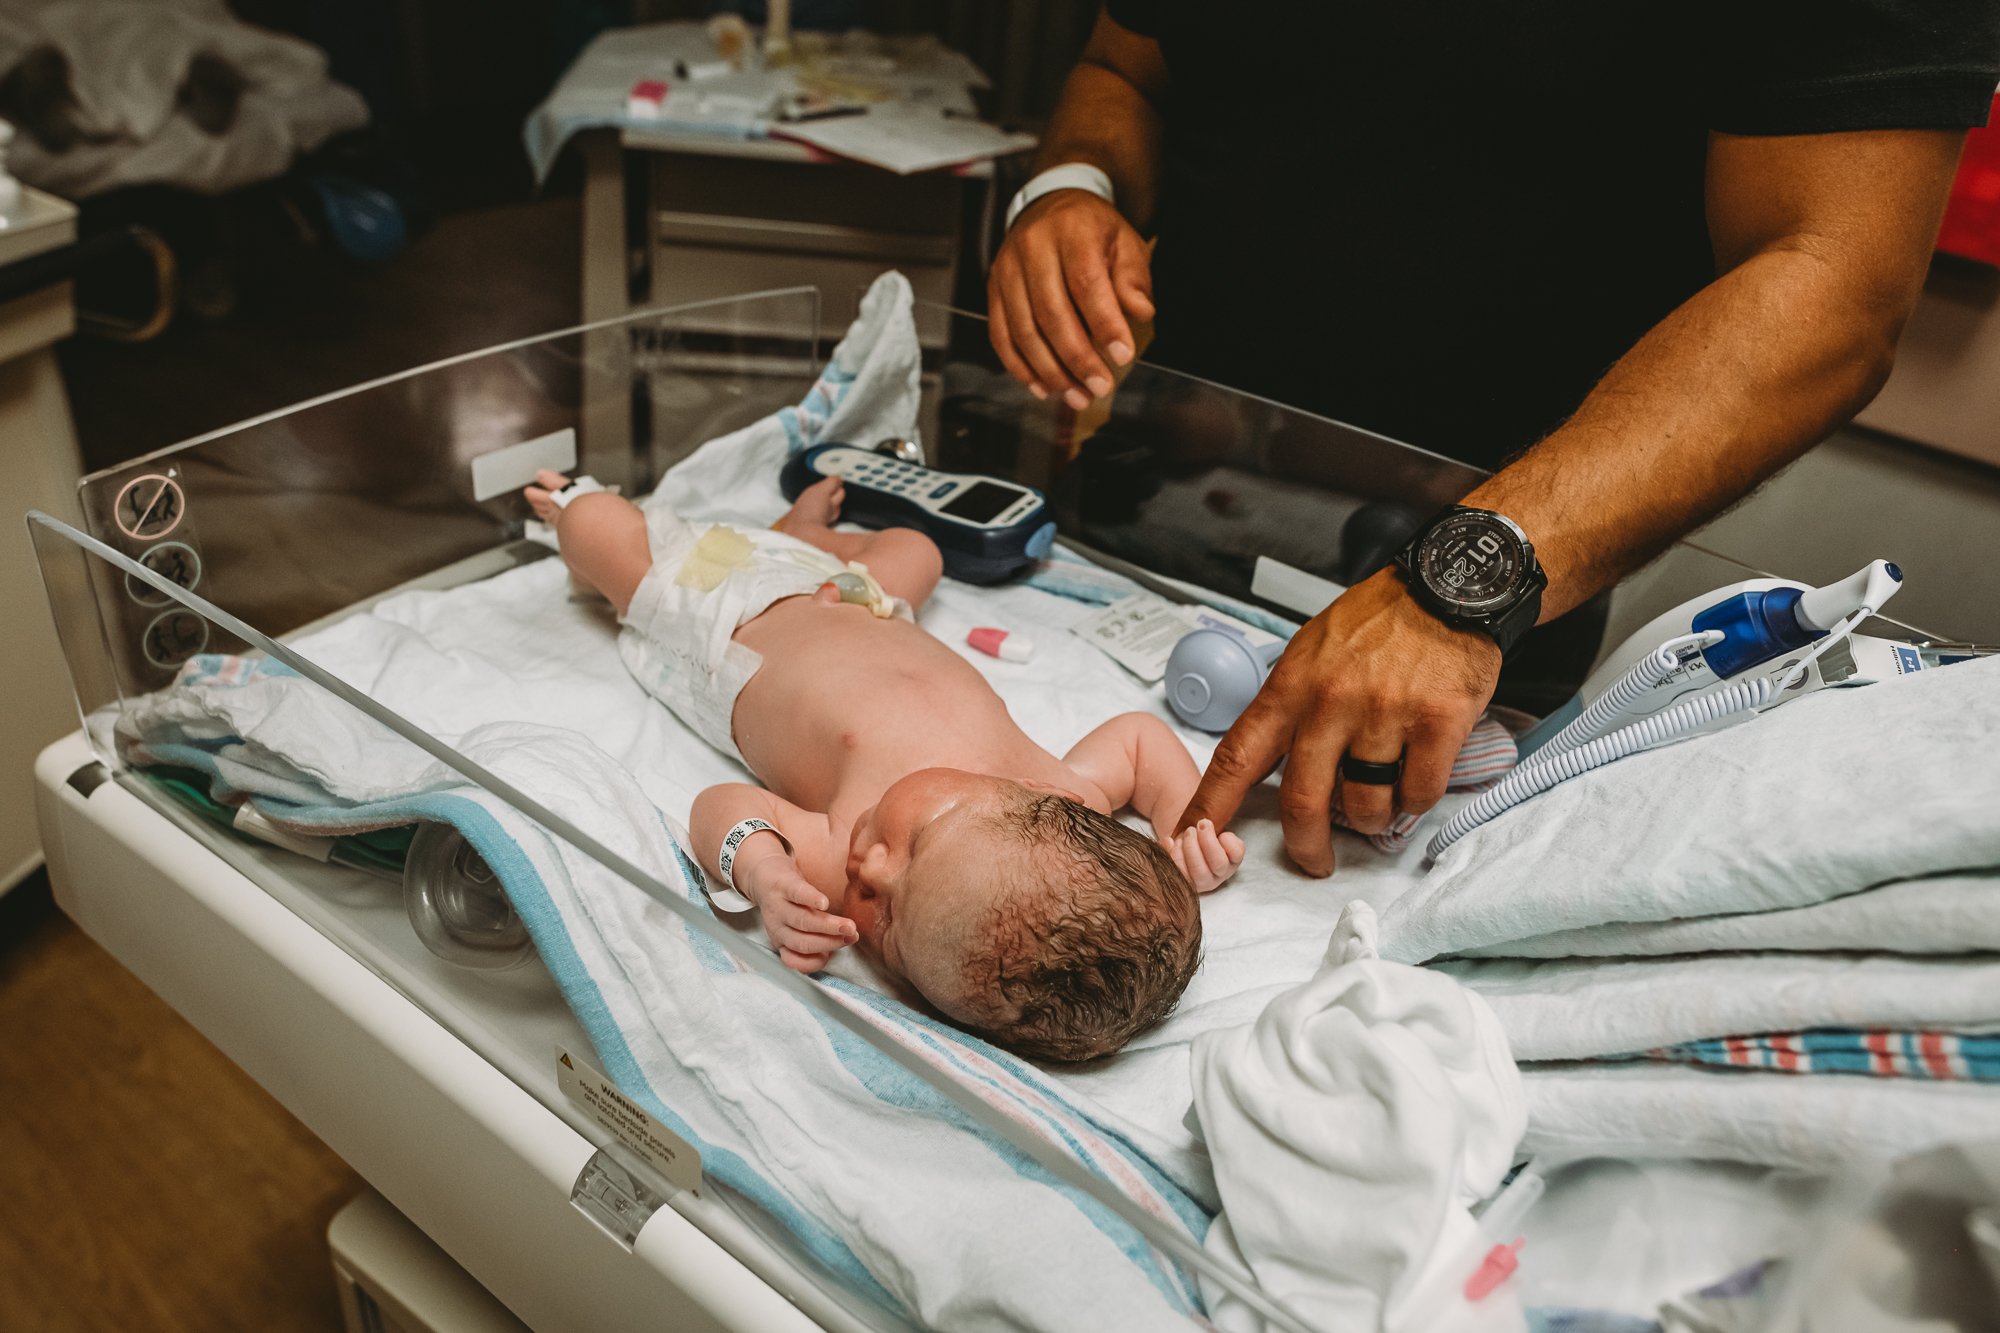 Hospital-birth-photography-kapiolani-honolulu-oahu-birth-dr-foley-epidural-mom-labors-with-support-husband-sarah-elizabeth-photos-and-film-oahu-birth-photographer-9465.jpg